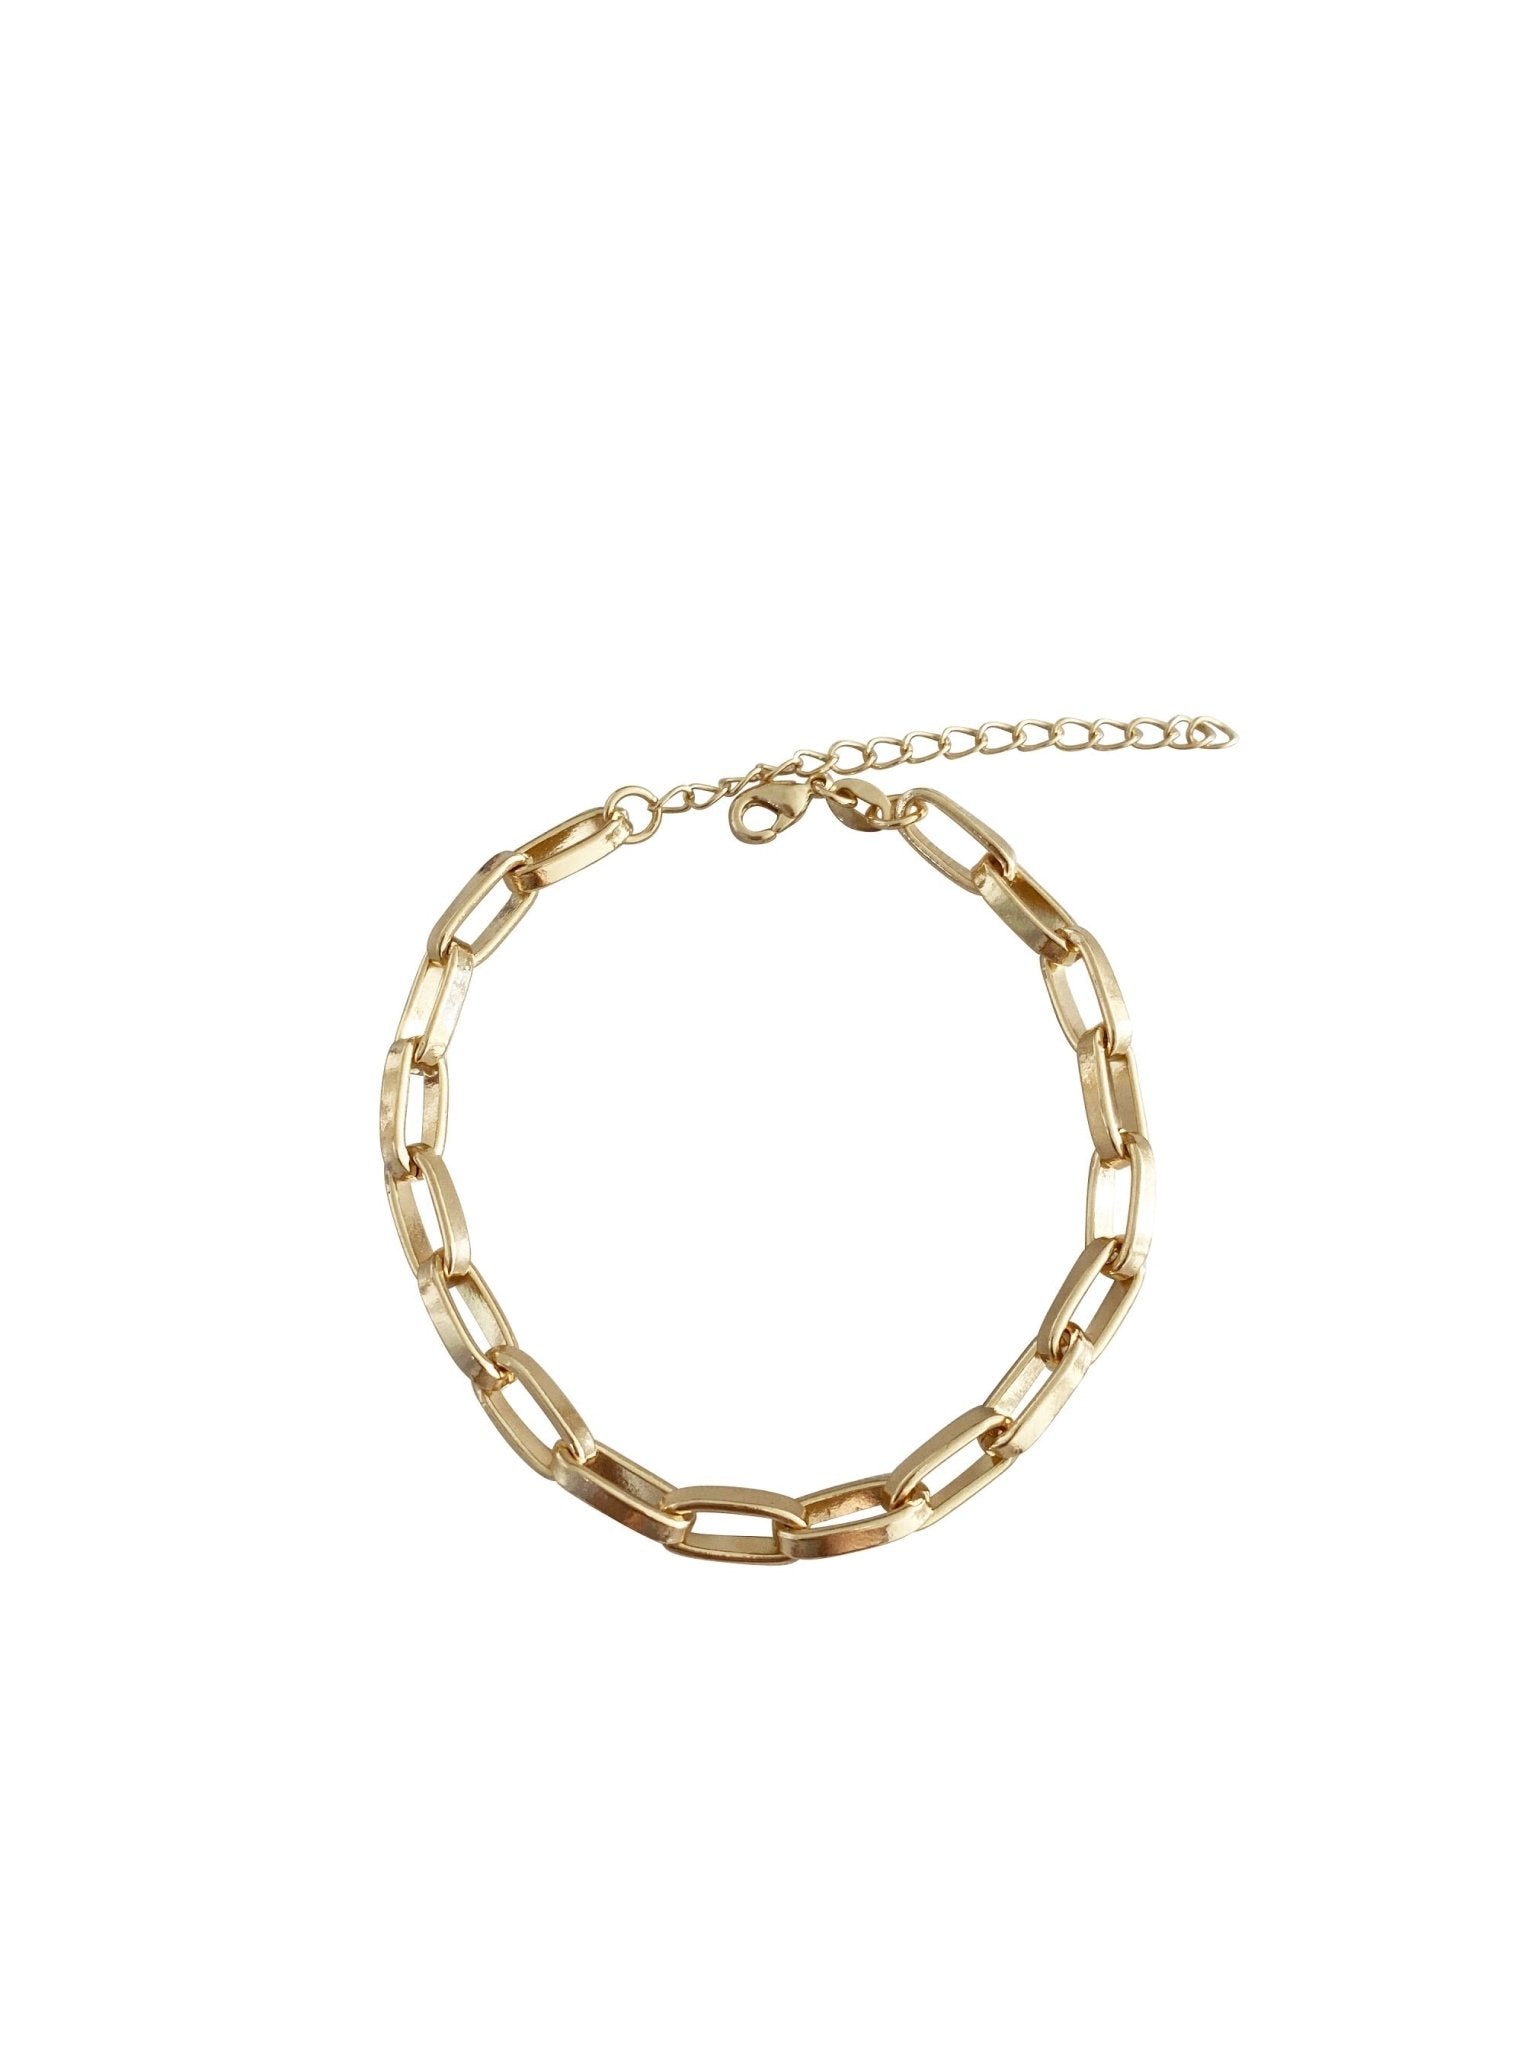 Scarlett Bracelet - Box Link Chain Bracelet - NOA - Bracelet